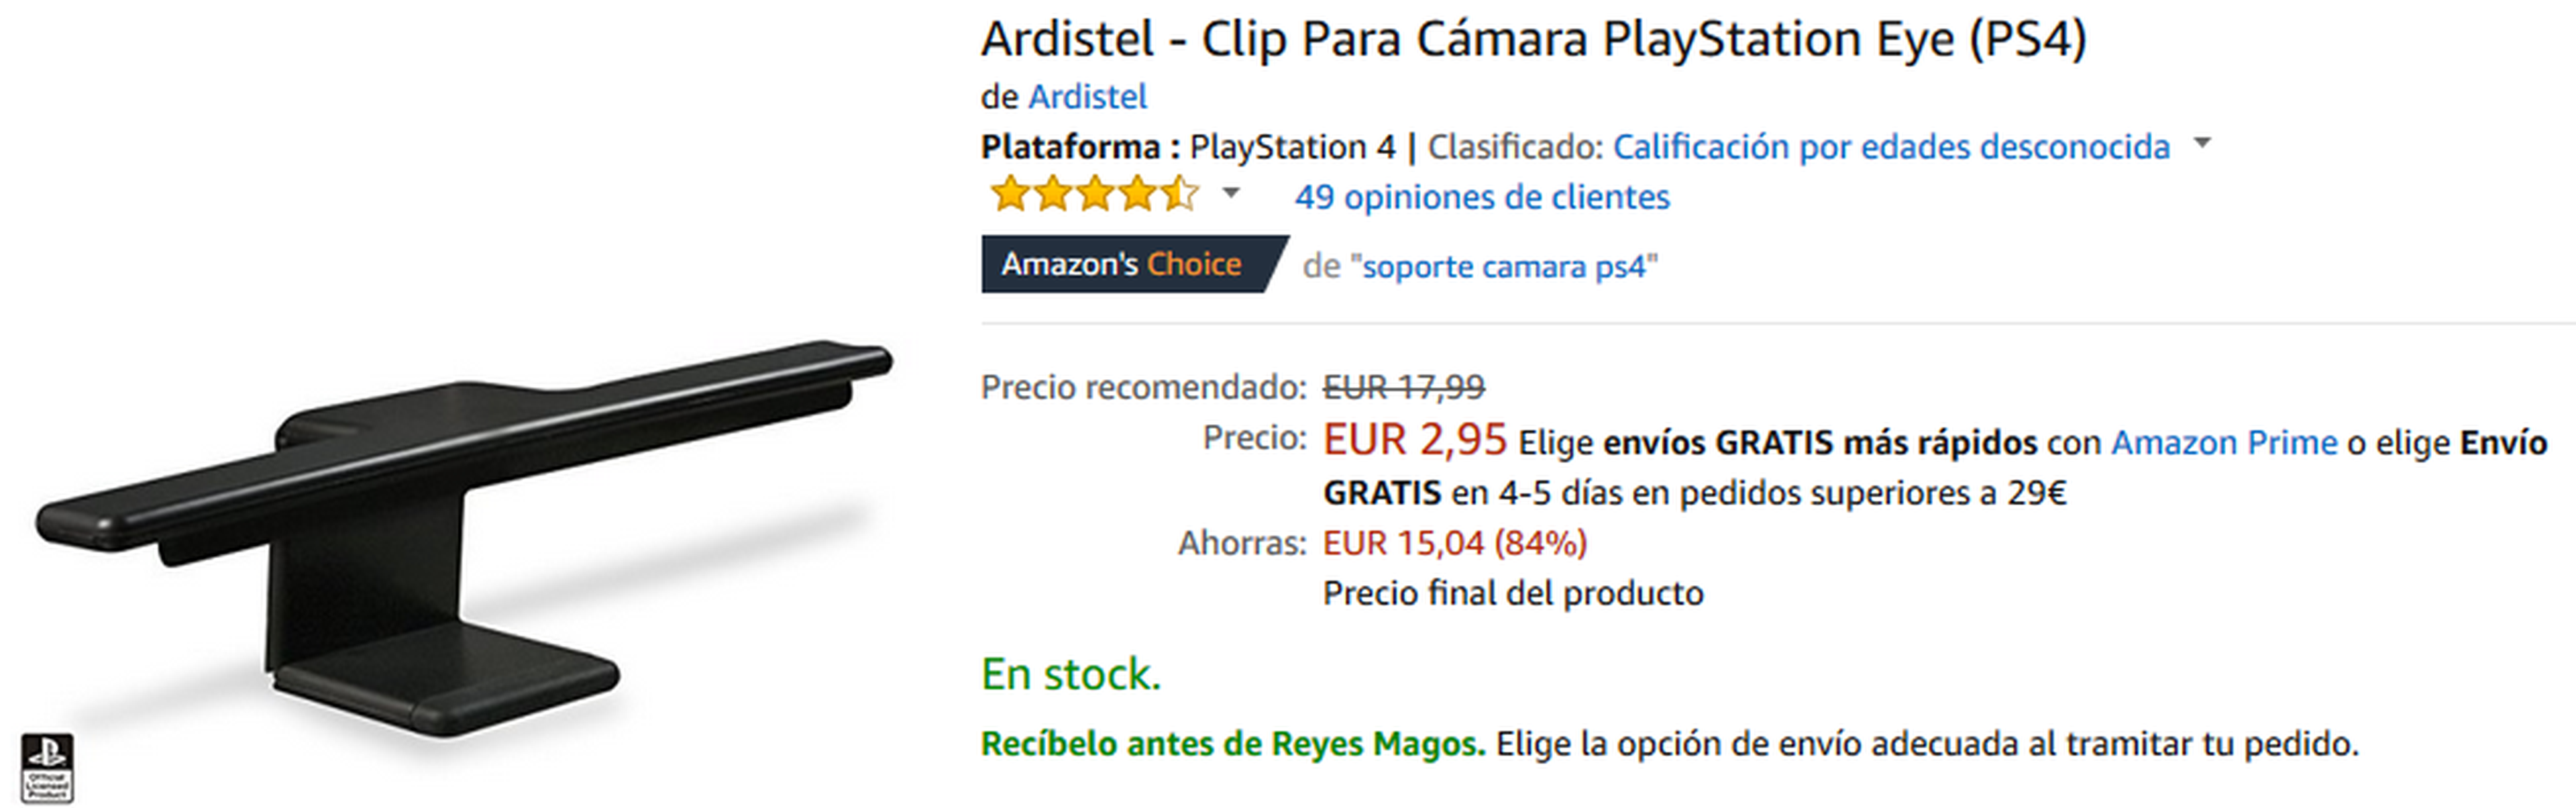 Ardistel - Clip Para Cámara PlayStation Eye (PS4)